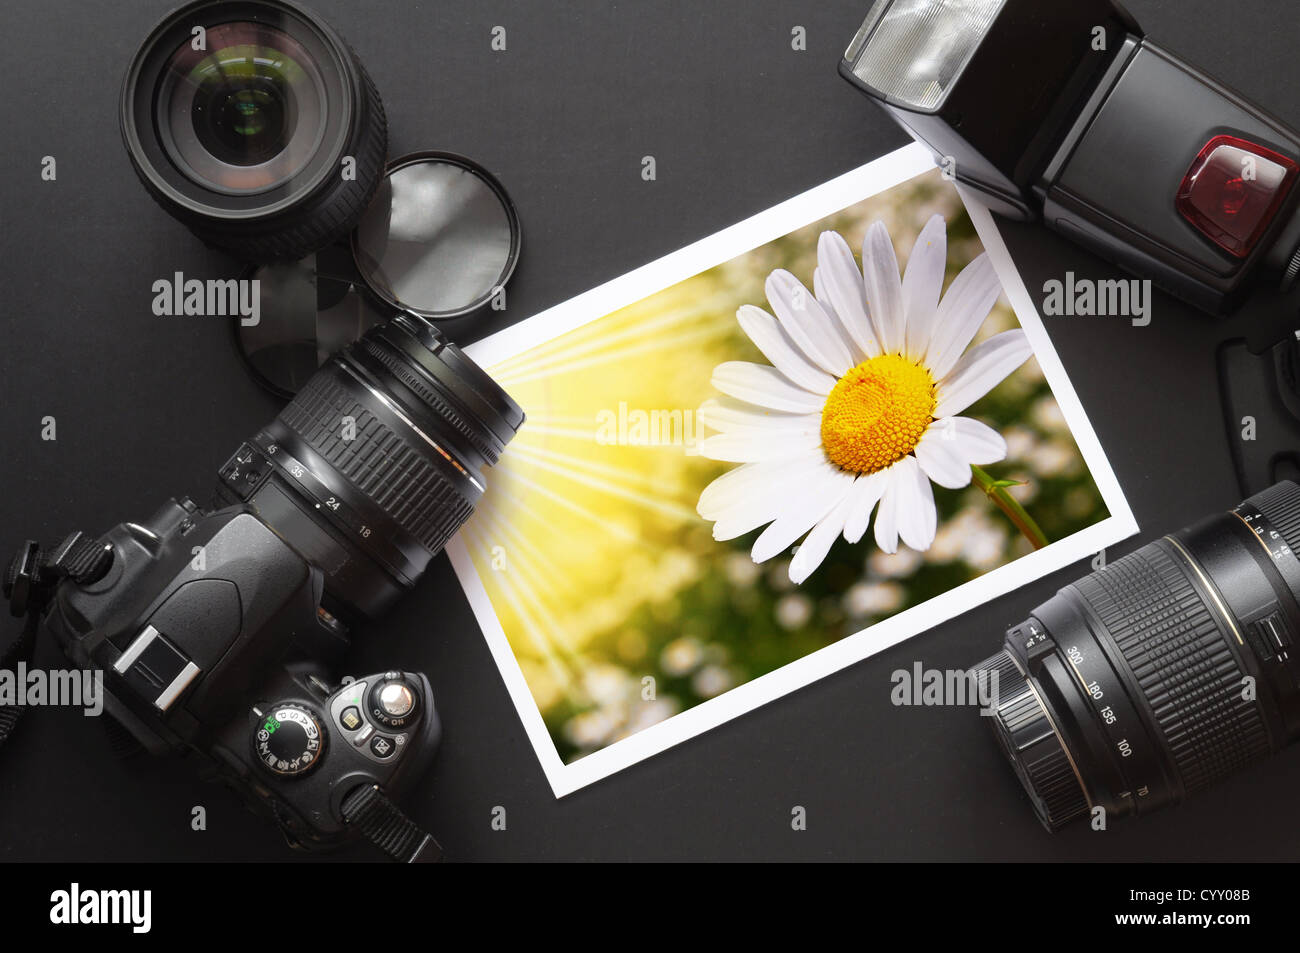 photography equipment like dslr camera  and image Stock Photo